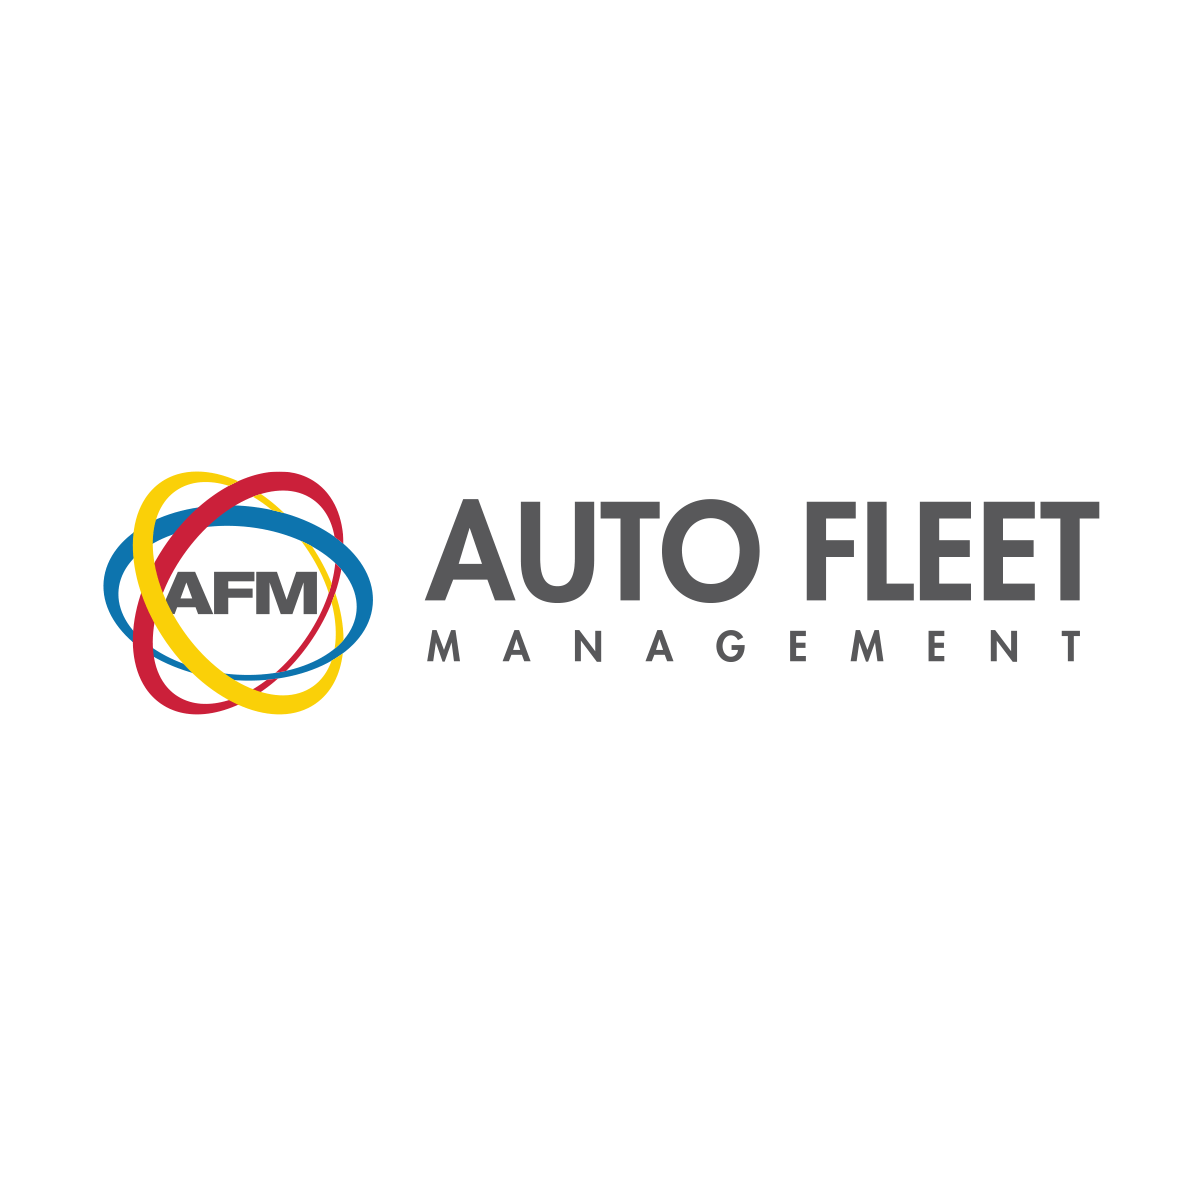 Auto Fleet Management